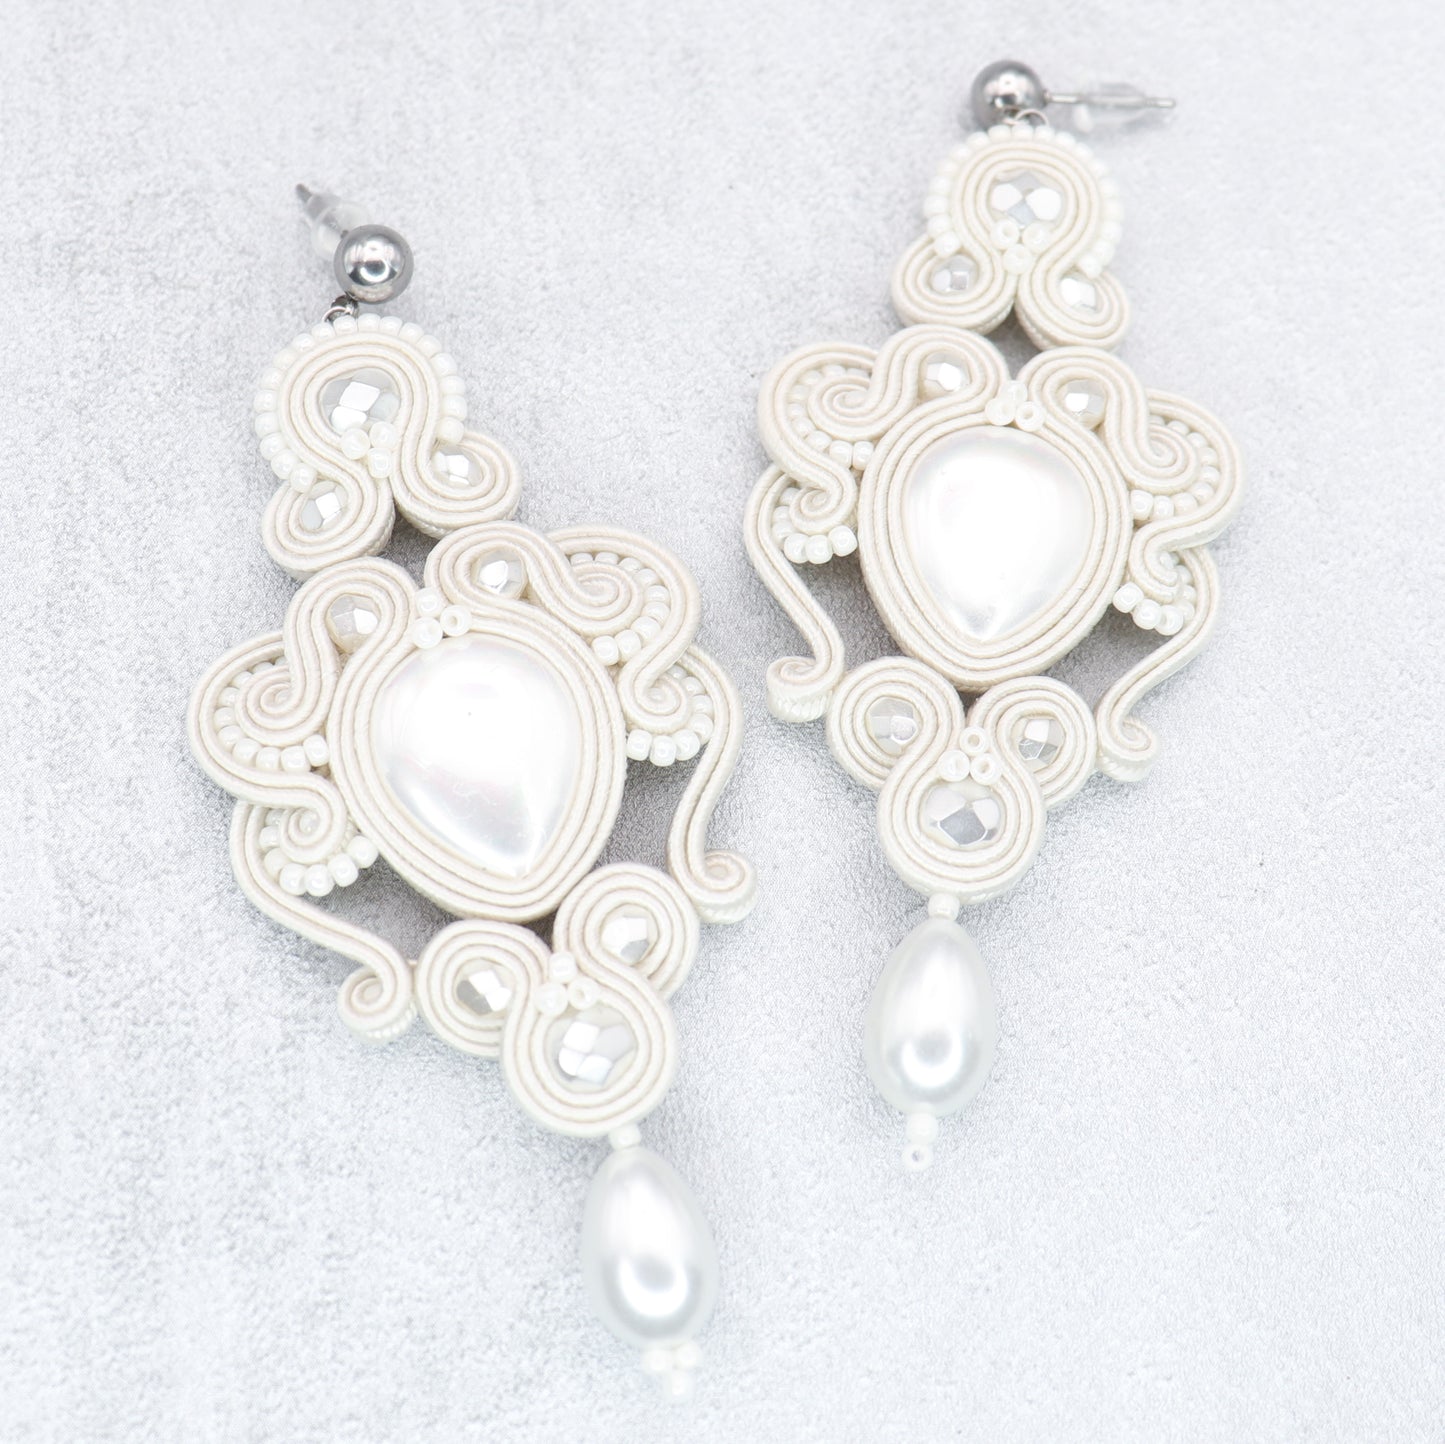 Bridal earrings. Handmade soutache earrings. Unique and lightweight ivory earrings.